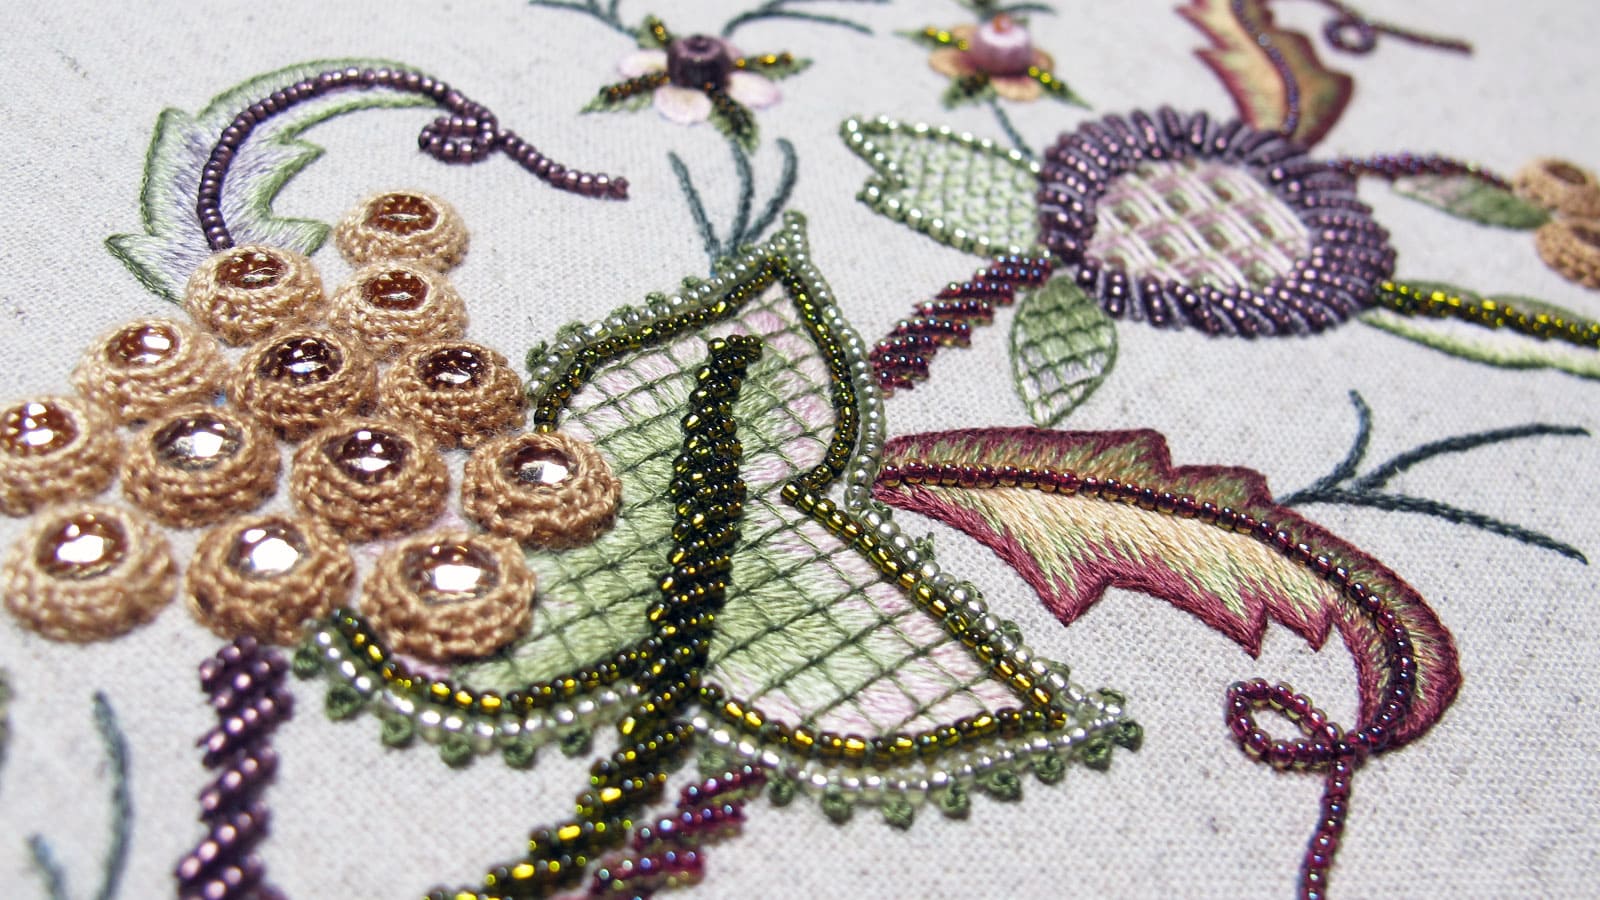 Cotton bloom cross stitch botanical pattern pdf, Round cross stitch cotton  plant embroidery cross stitch cotton flower needlepoint blackwork